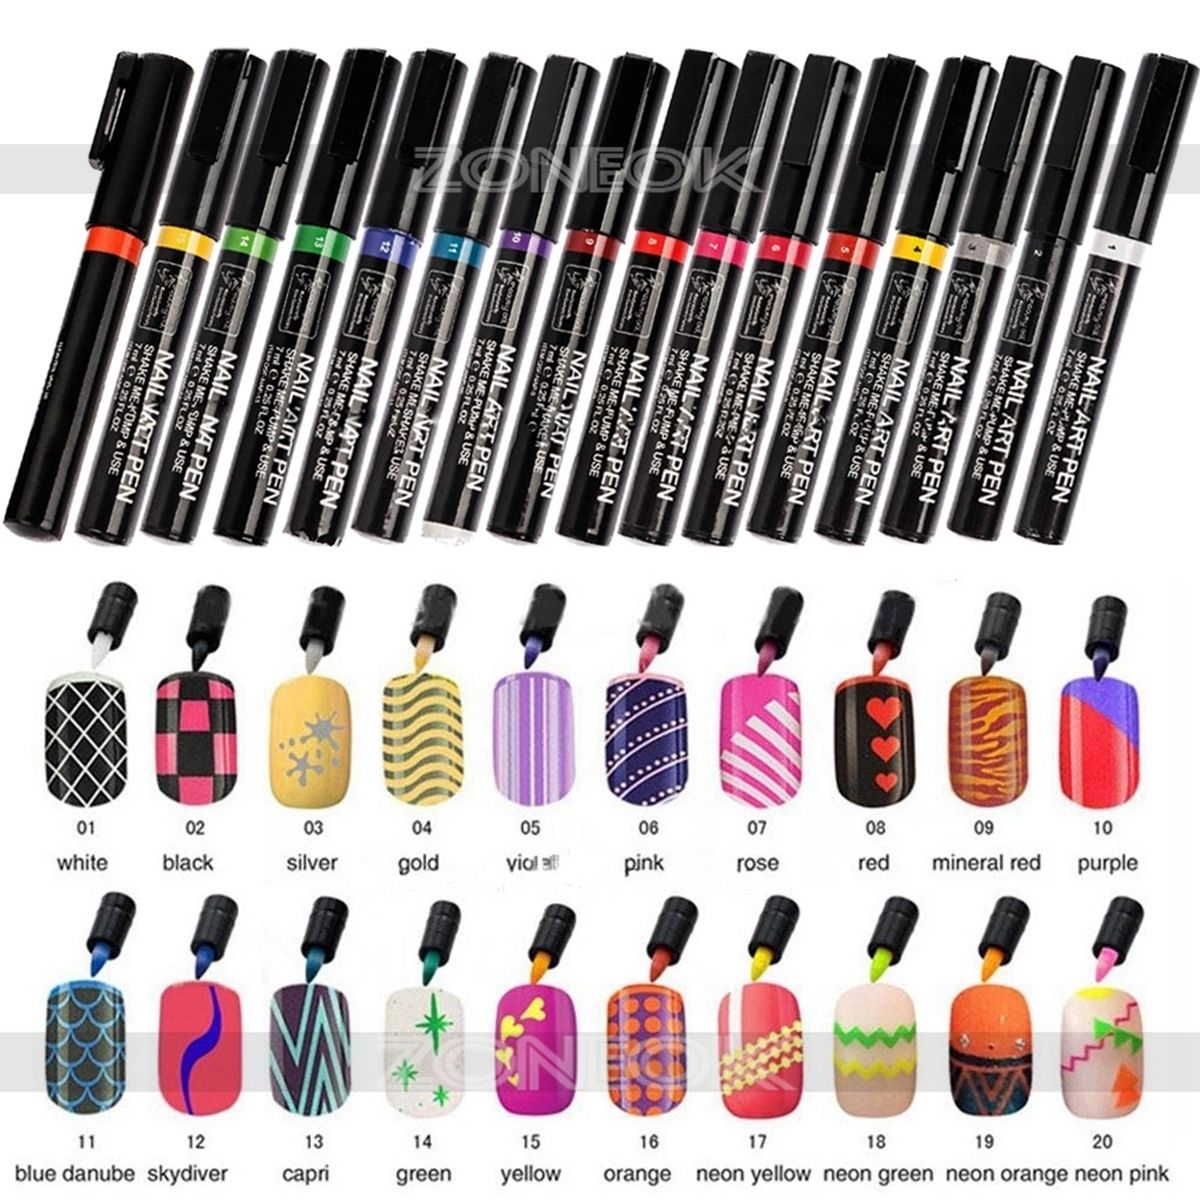 Free Shipping 16 Colors Charm Women s Delicate Pretty Nail Art Pen Polish UV Gel Manicure